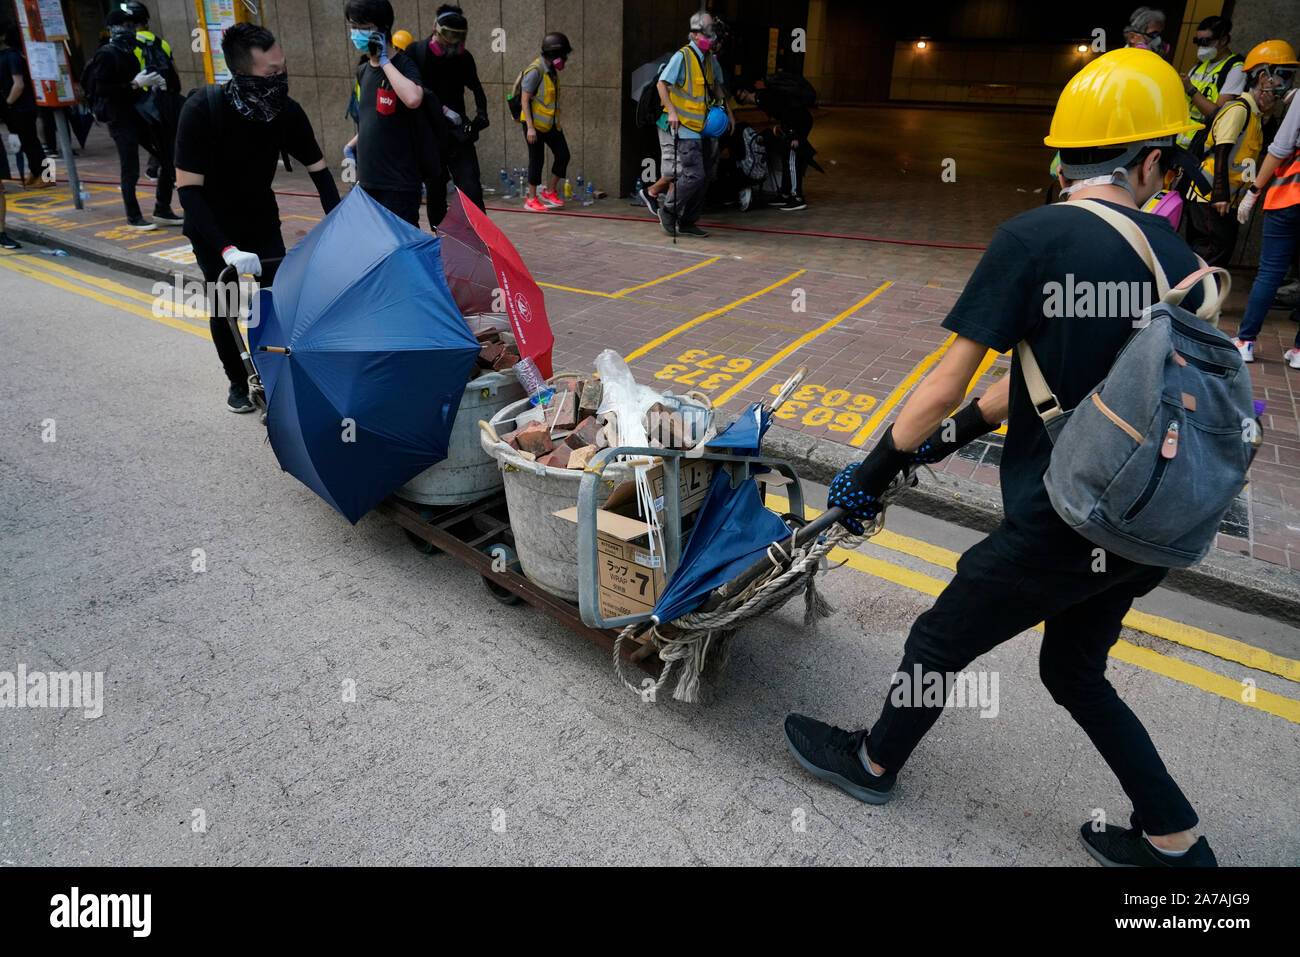 Pro-demokratischen Demonstranten bewegen Ziegel auf Wagen in Richtung Polizei Linien in Hongkong Stockfoto